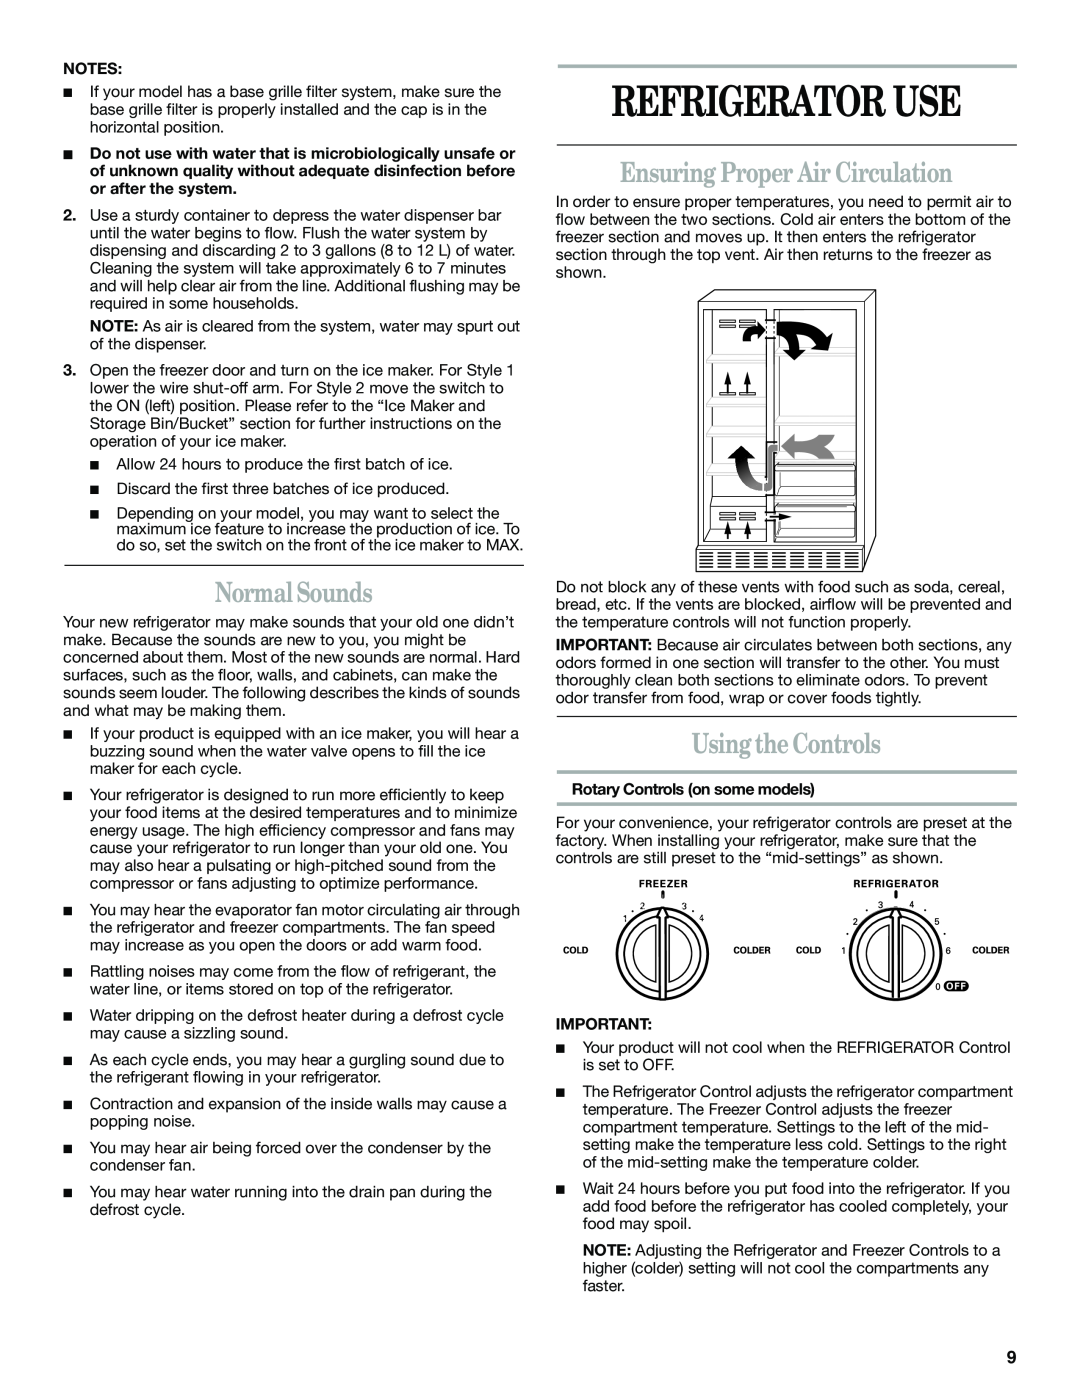 Whirlpool GS6SHANLB00 manual Refrigerator Use, Normal Sounds, Ensuring Proper Air Circulation, Using the Controls 